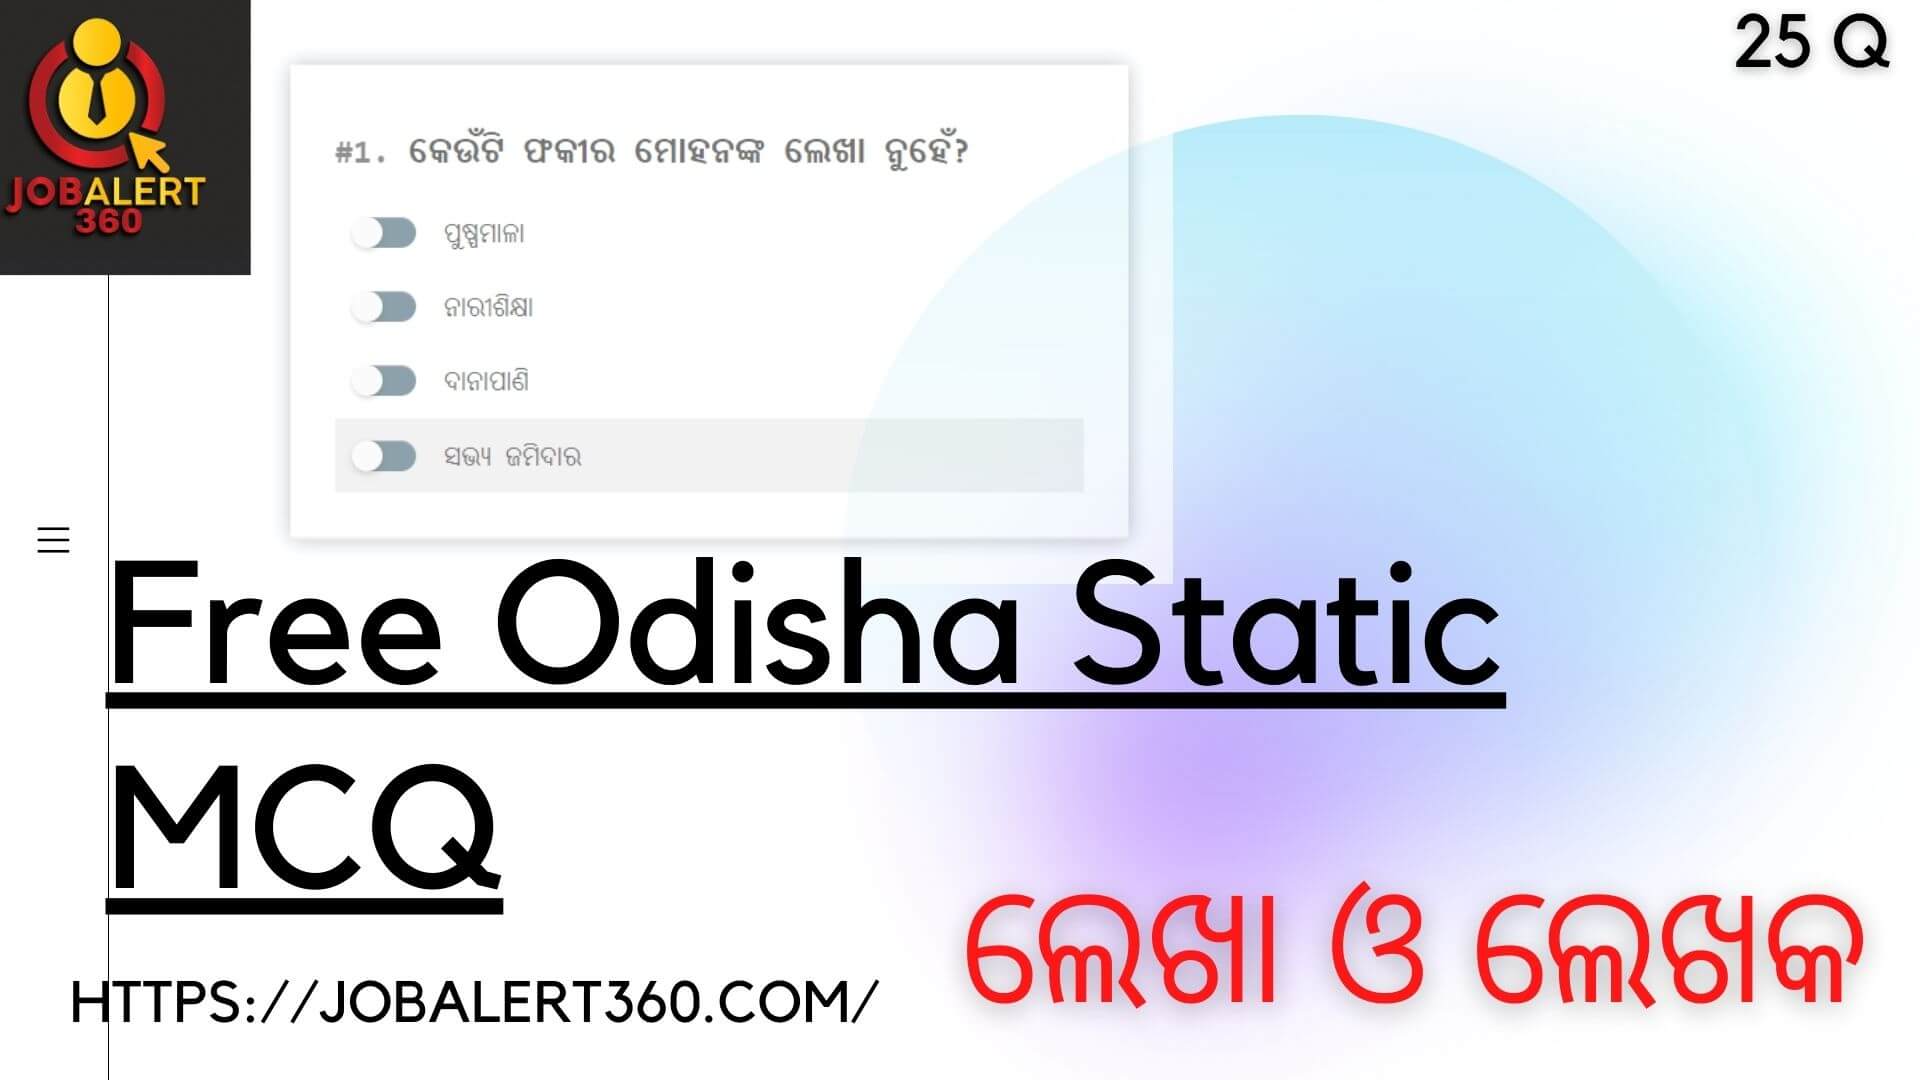 Free Odisha Static MCQ